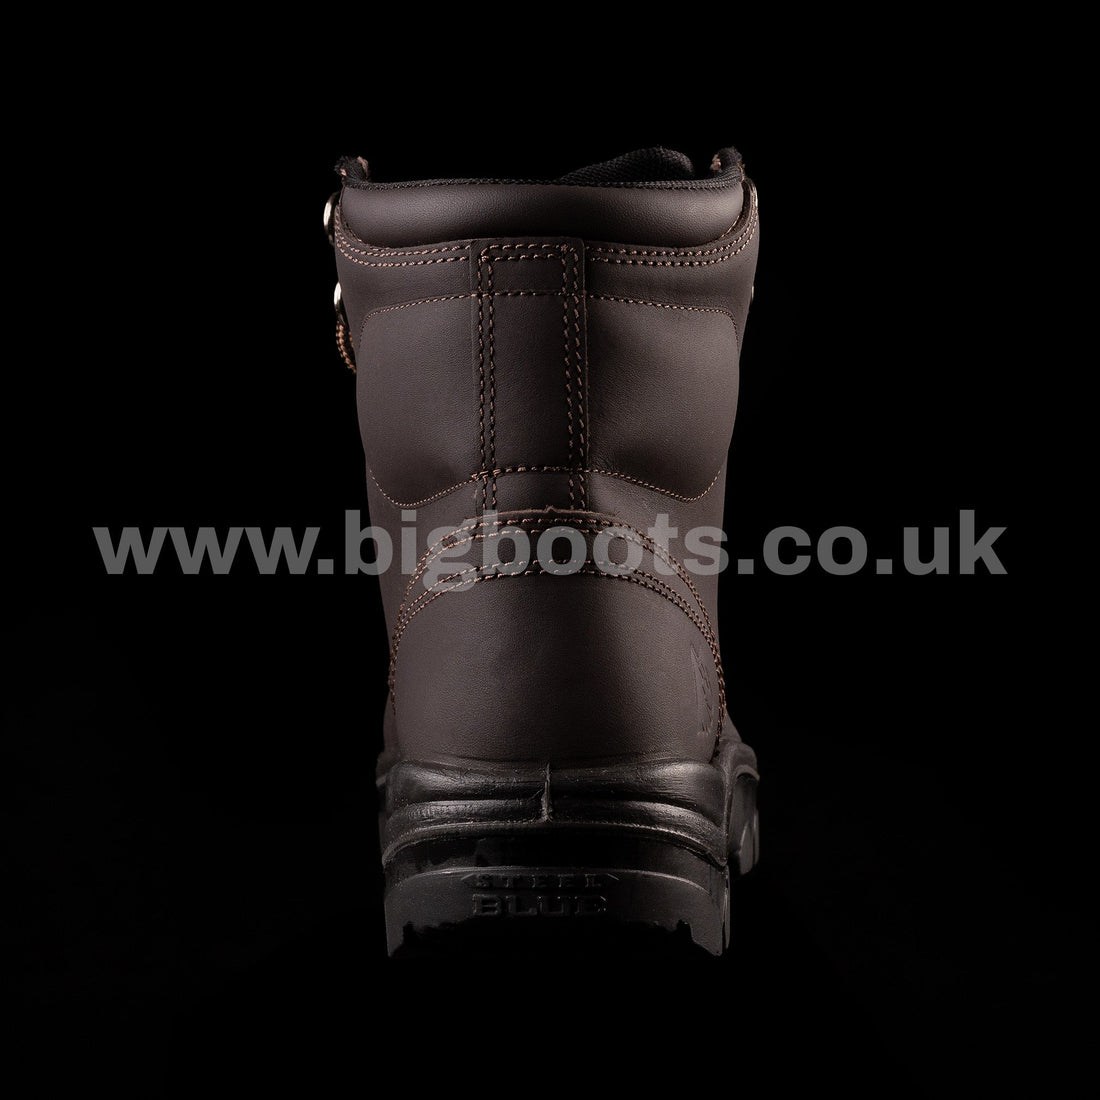 Steel Blue Argyle Mens Work Boots - Claret S3 - BIG Boots UK